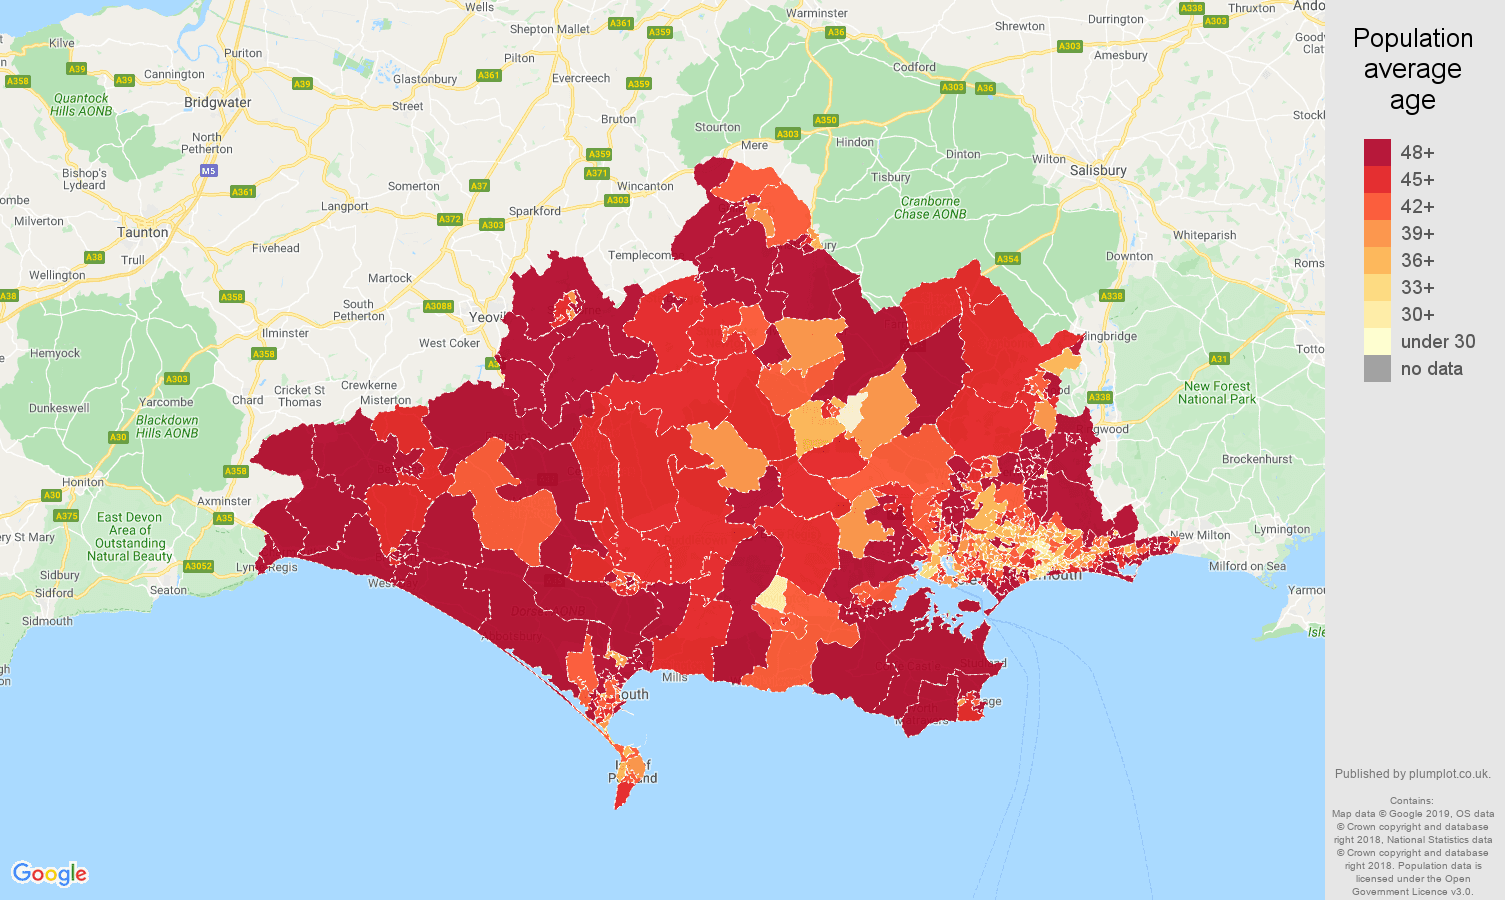 Dorset population average age map